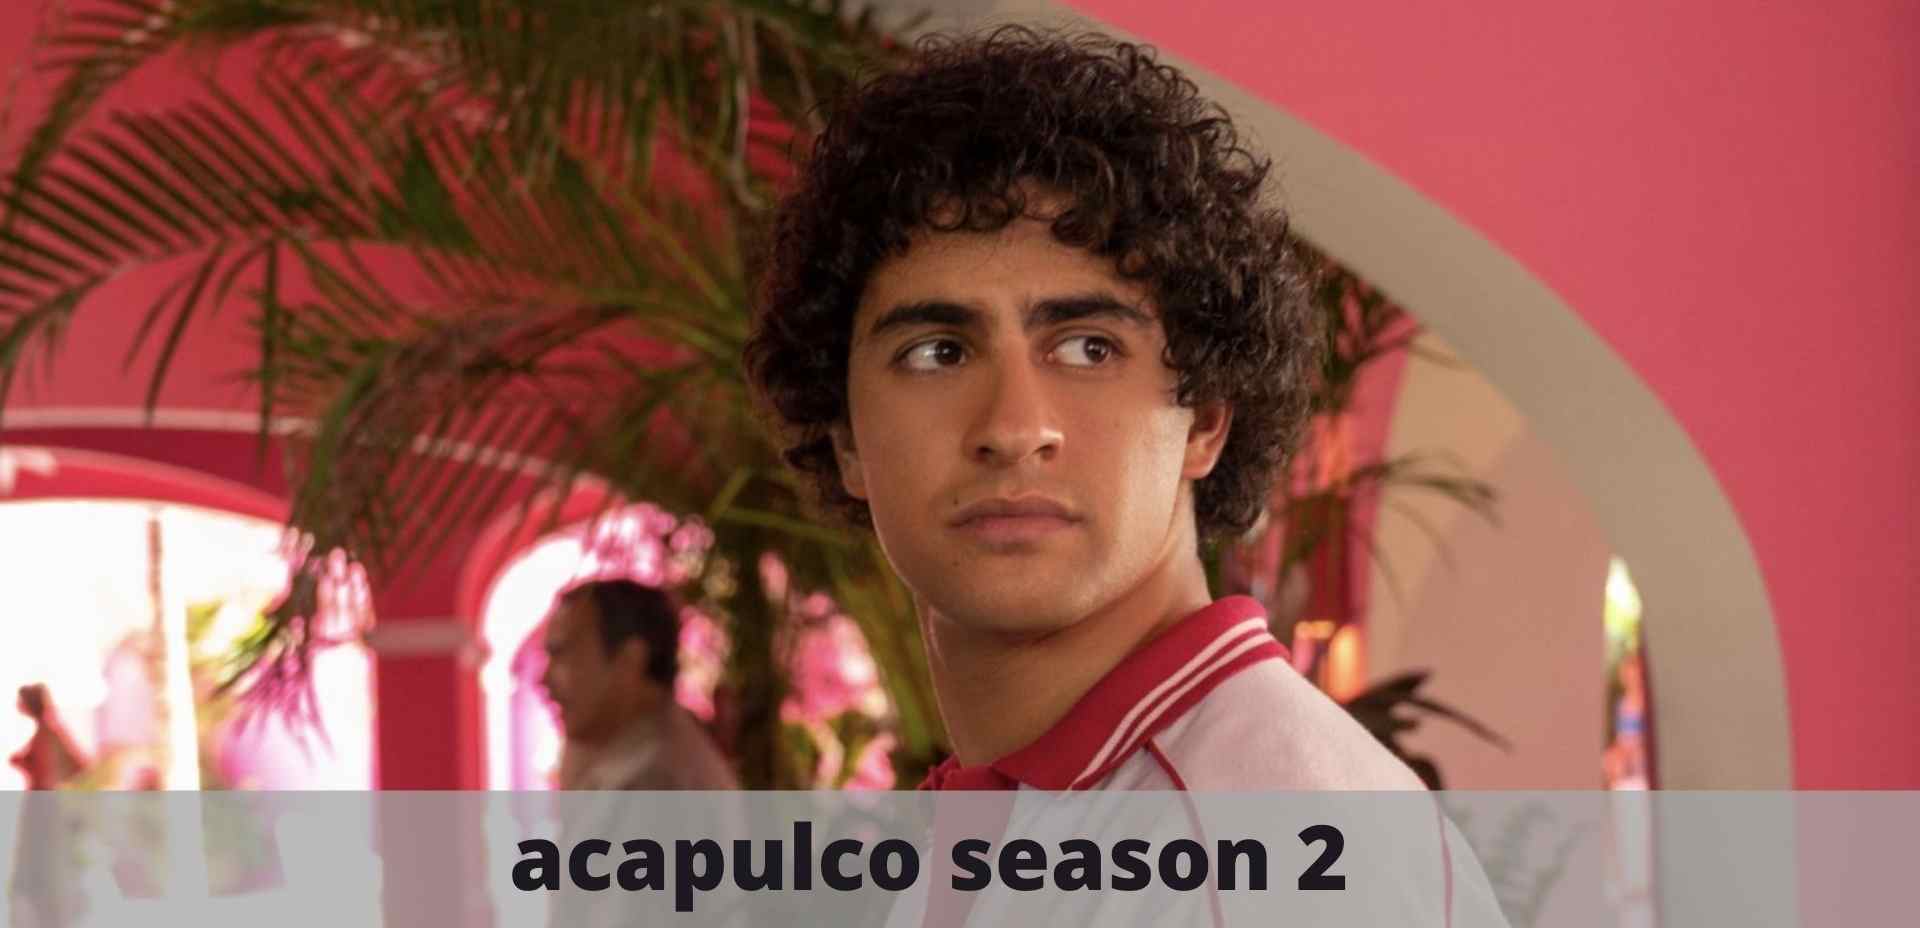 acapulco season 2